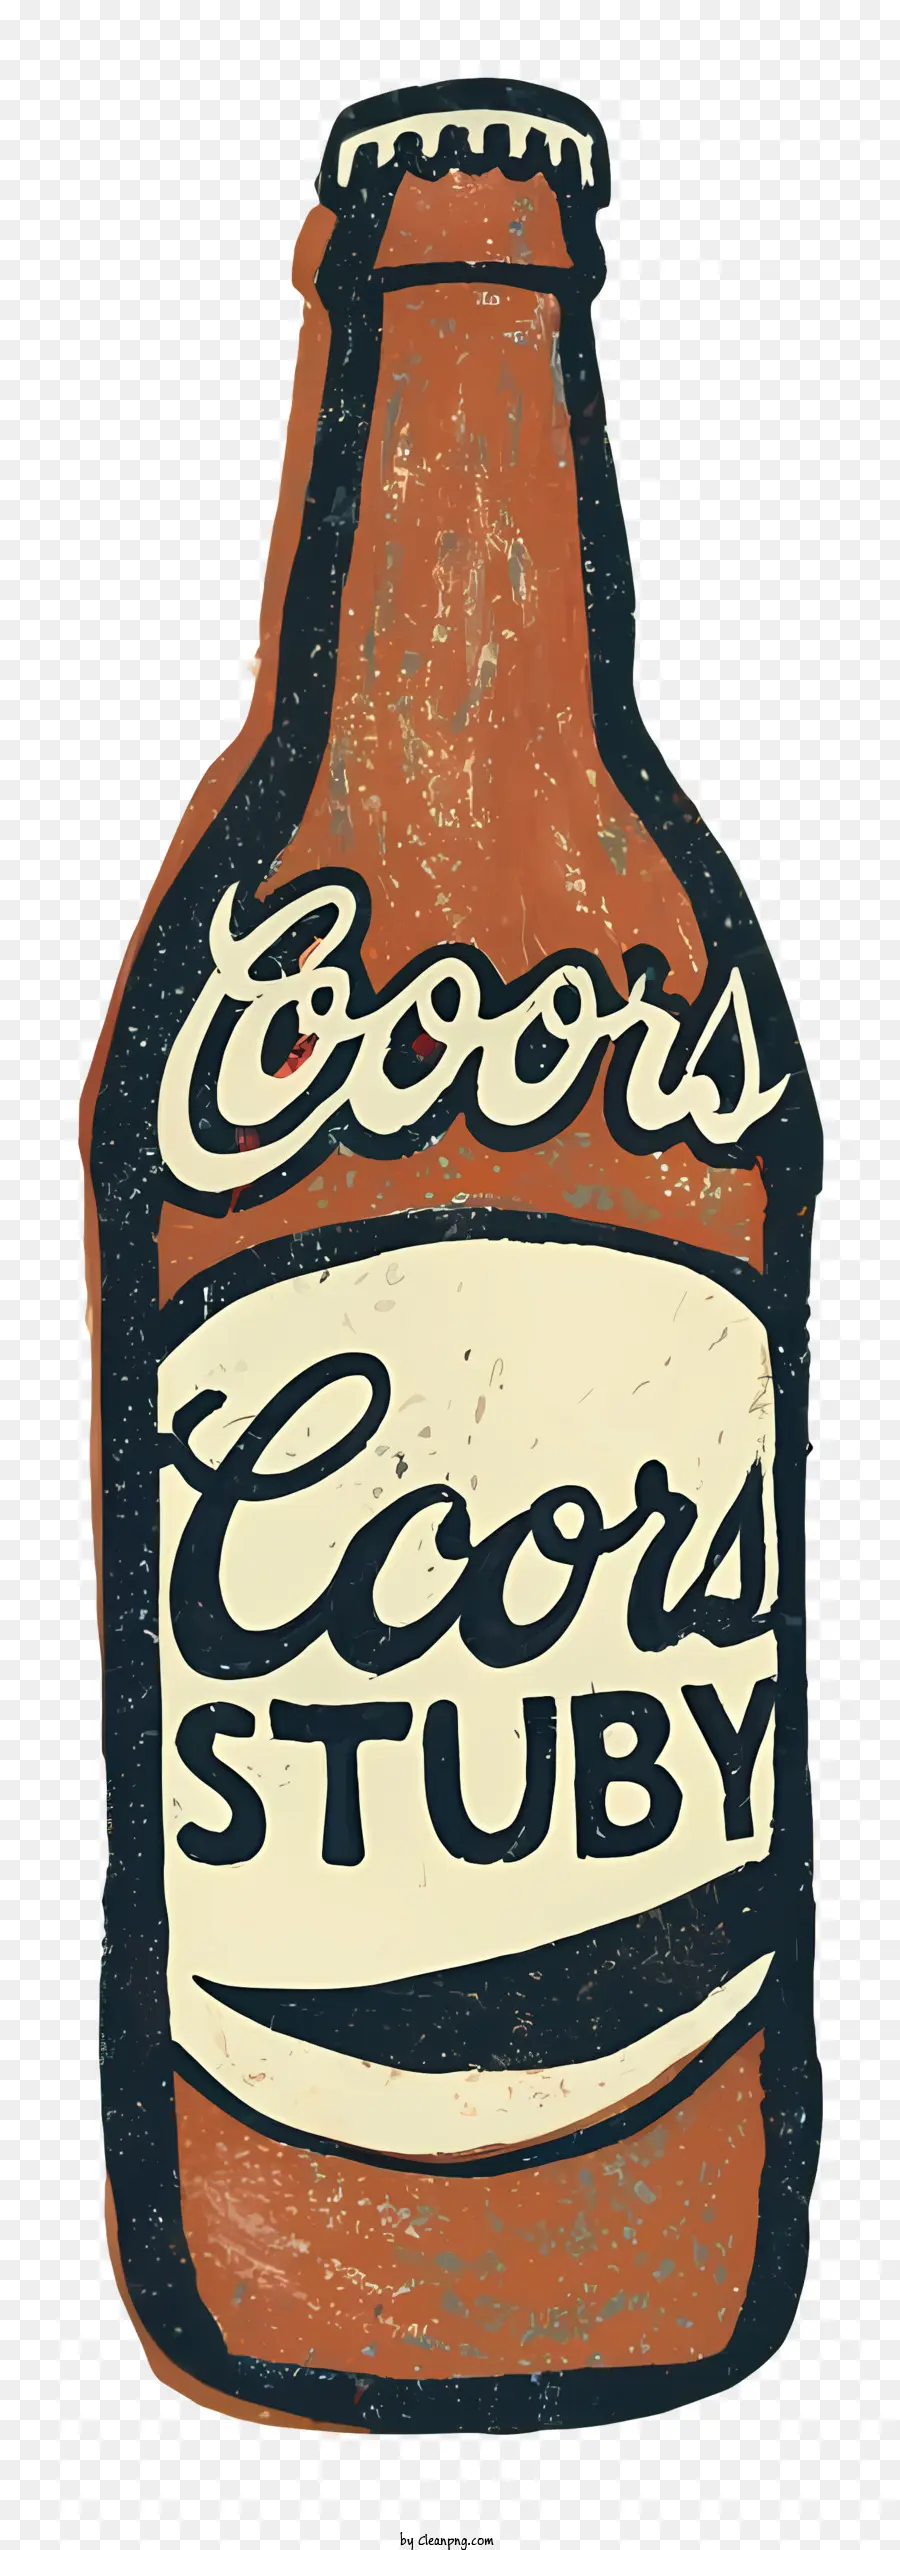 cobra stud beer clear glass bottle brown label handwritten script font aged bottle